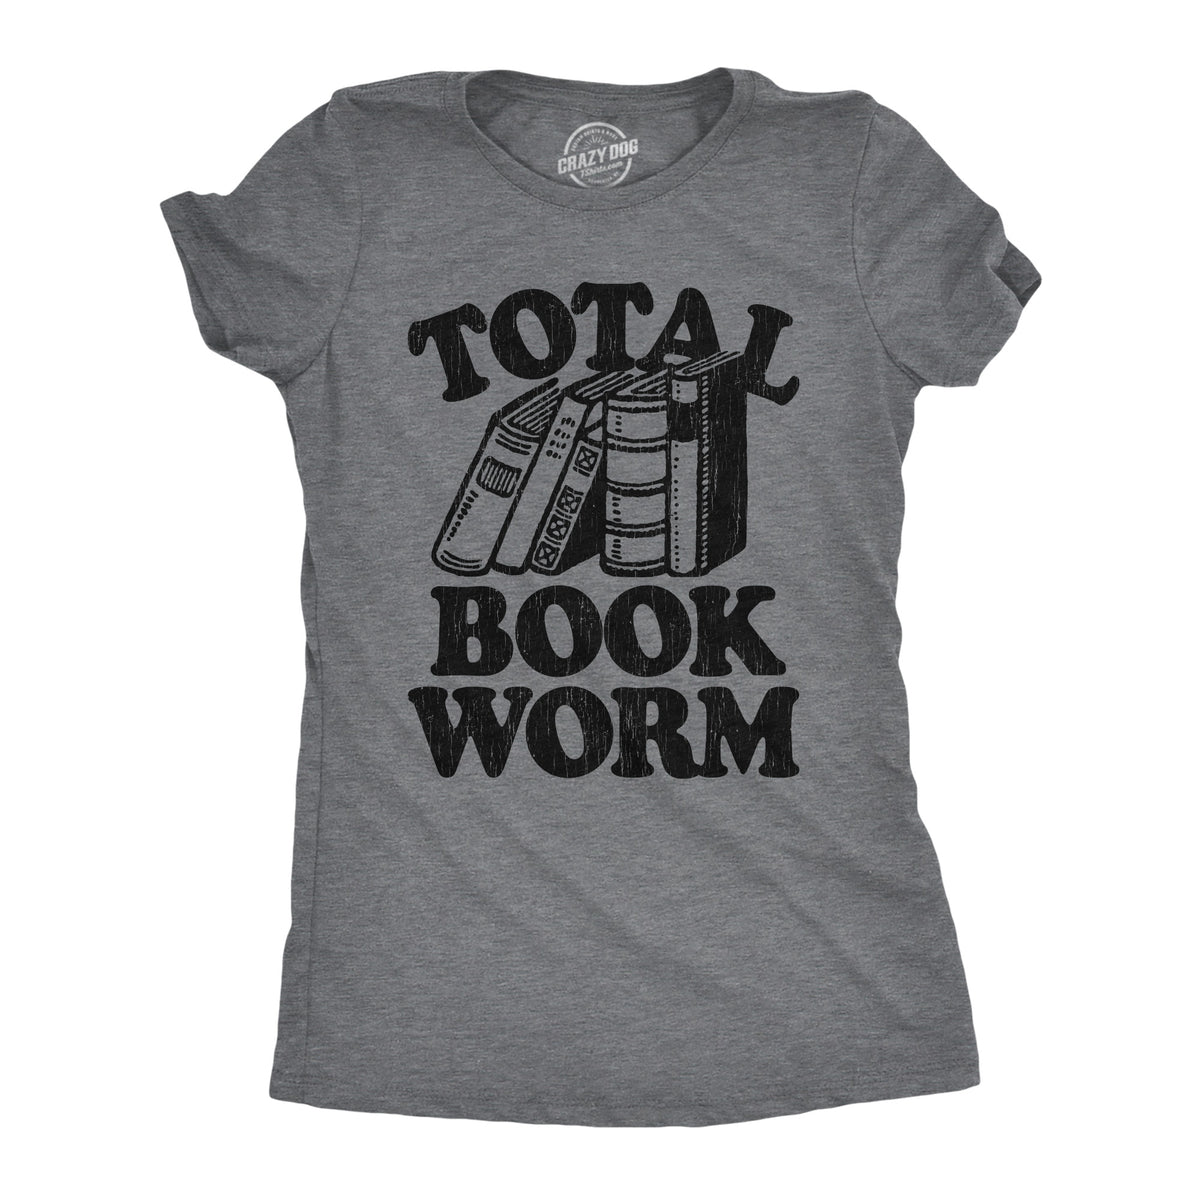 Funny Dark Heather Grey - BOOK Total Book Worm Womens T Shirt Nerdy Nerdy Tee